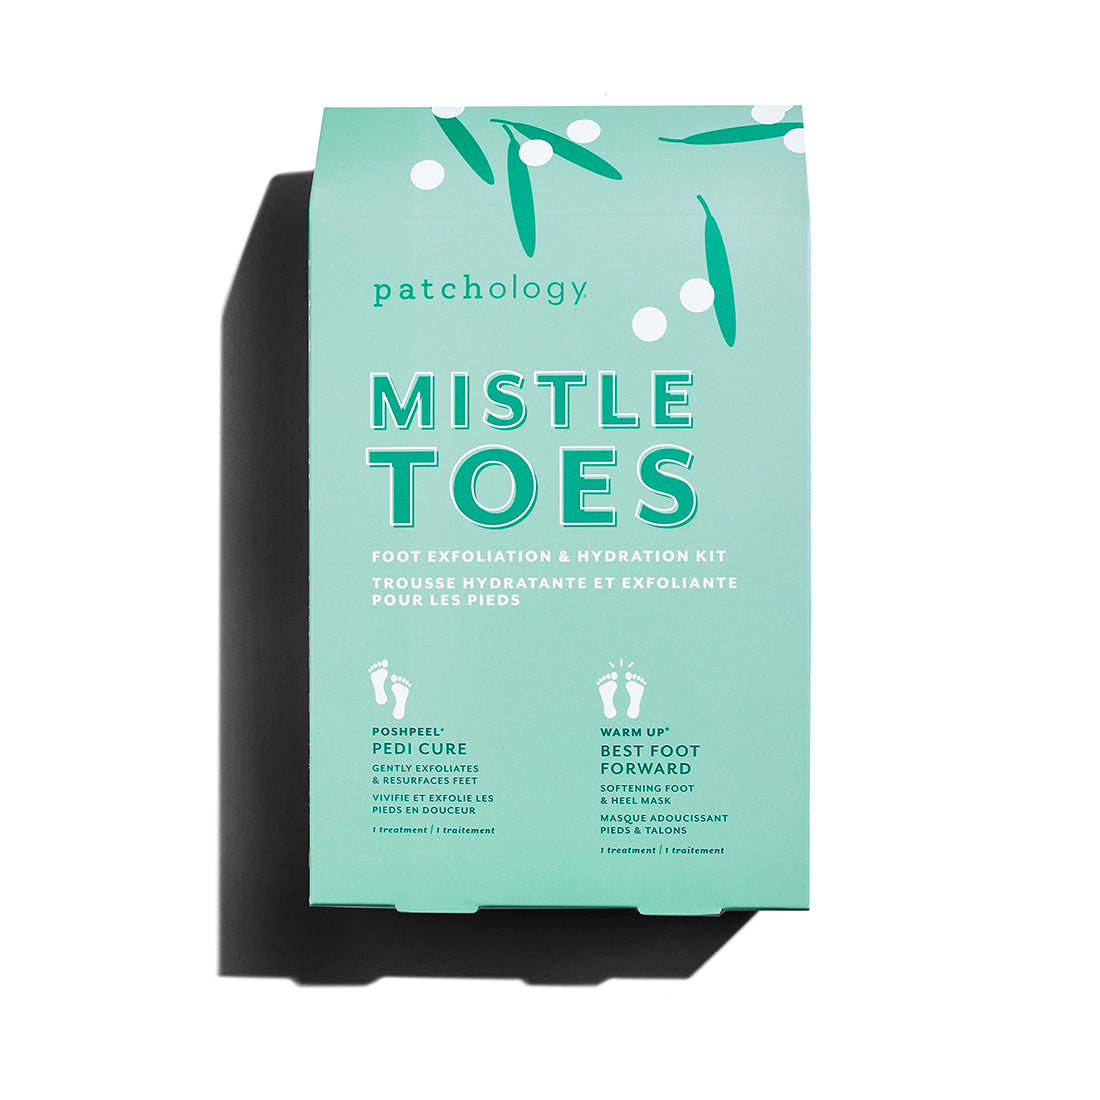 MistleToes: Foot Exfoliation & Hydration Kit